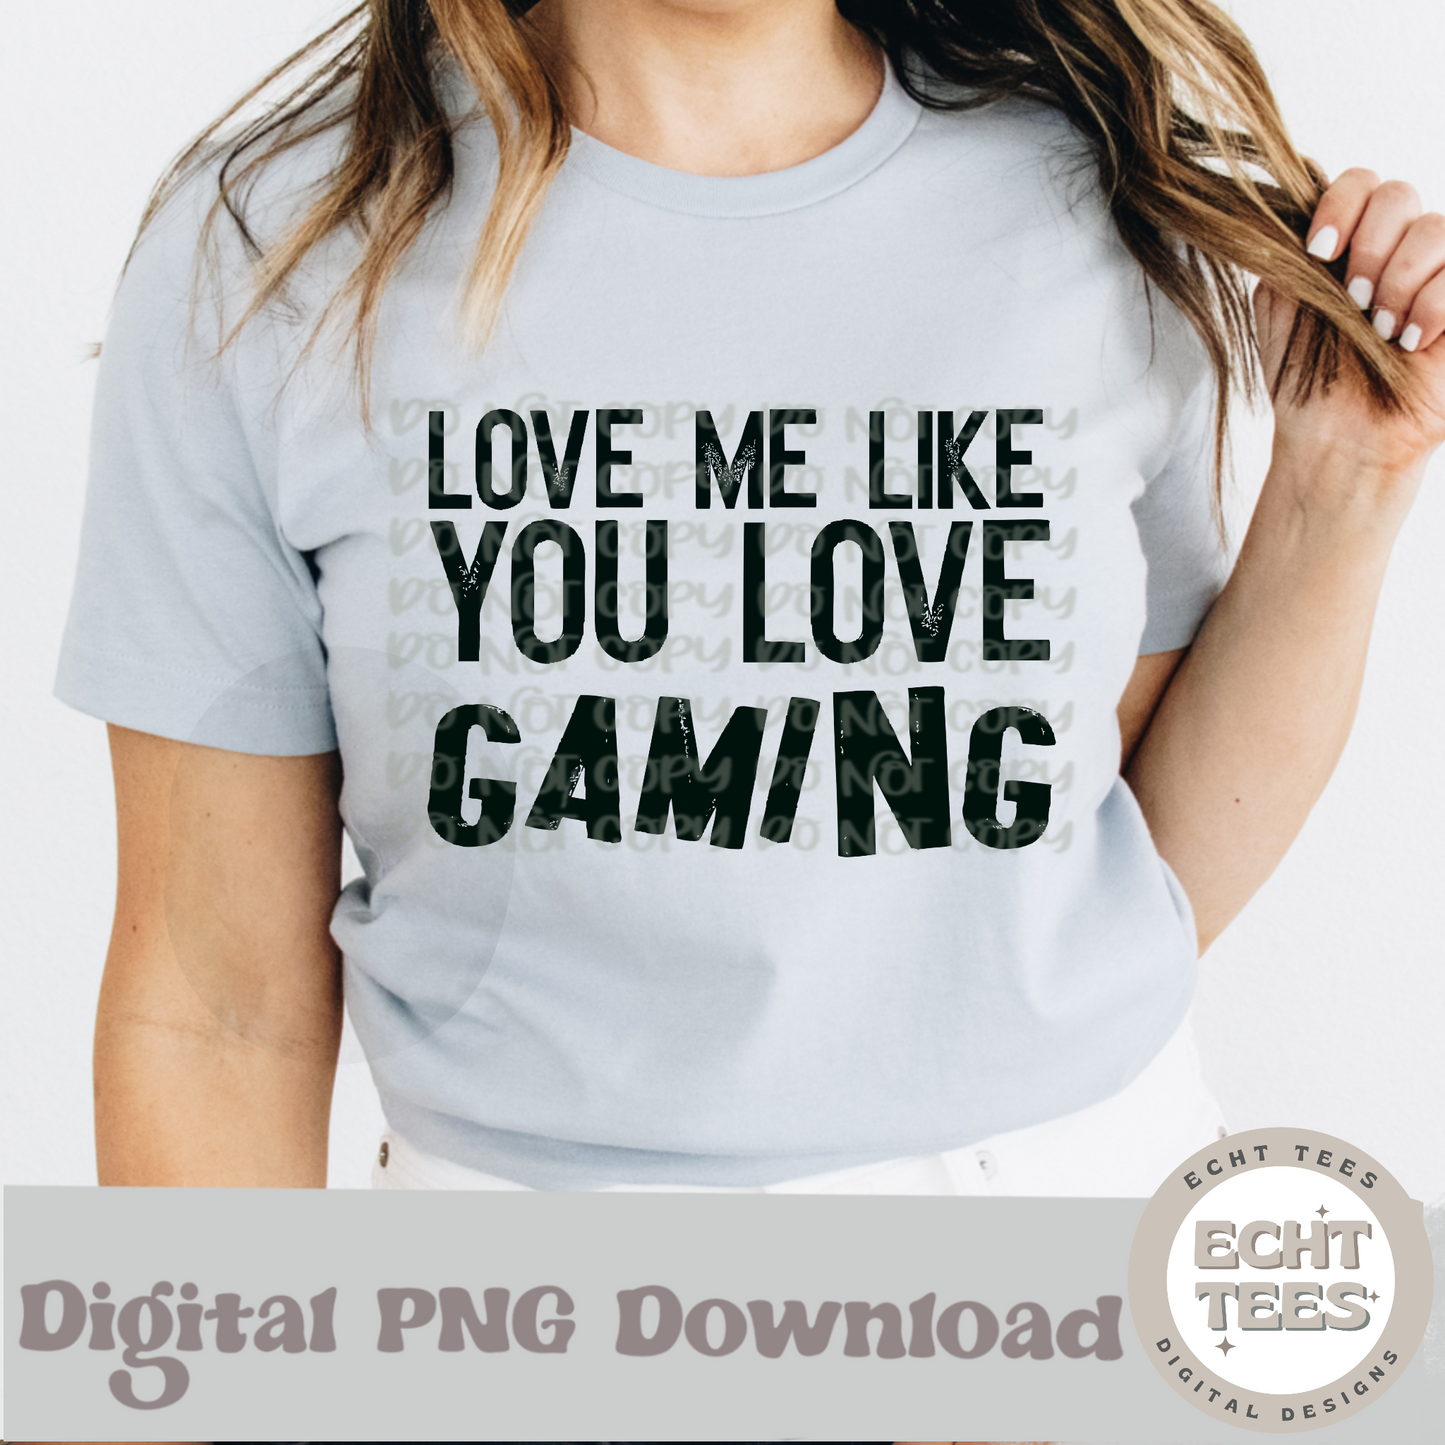 Love me like you love gaming PNG Digital Download